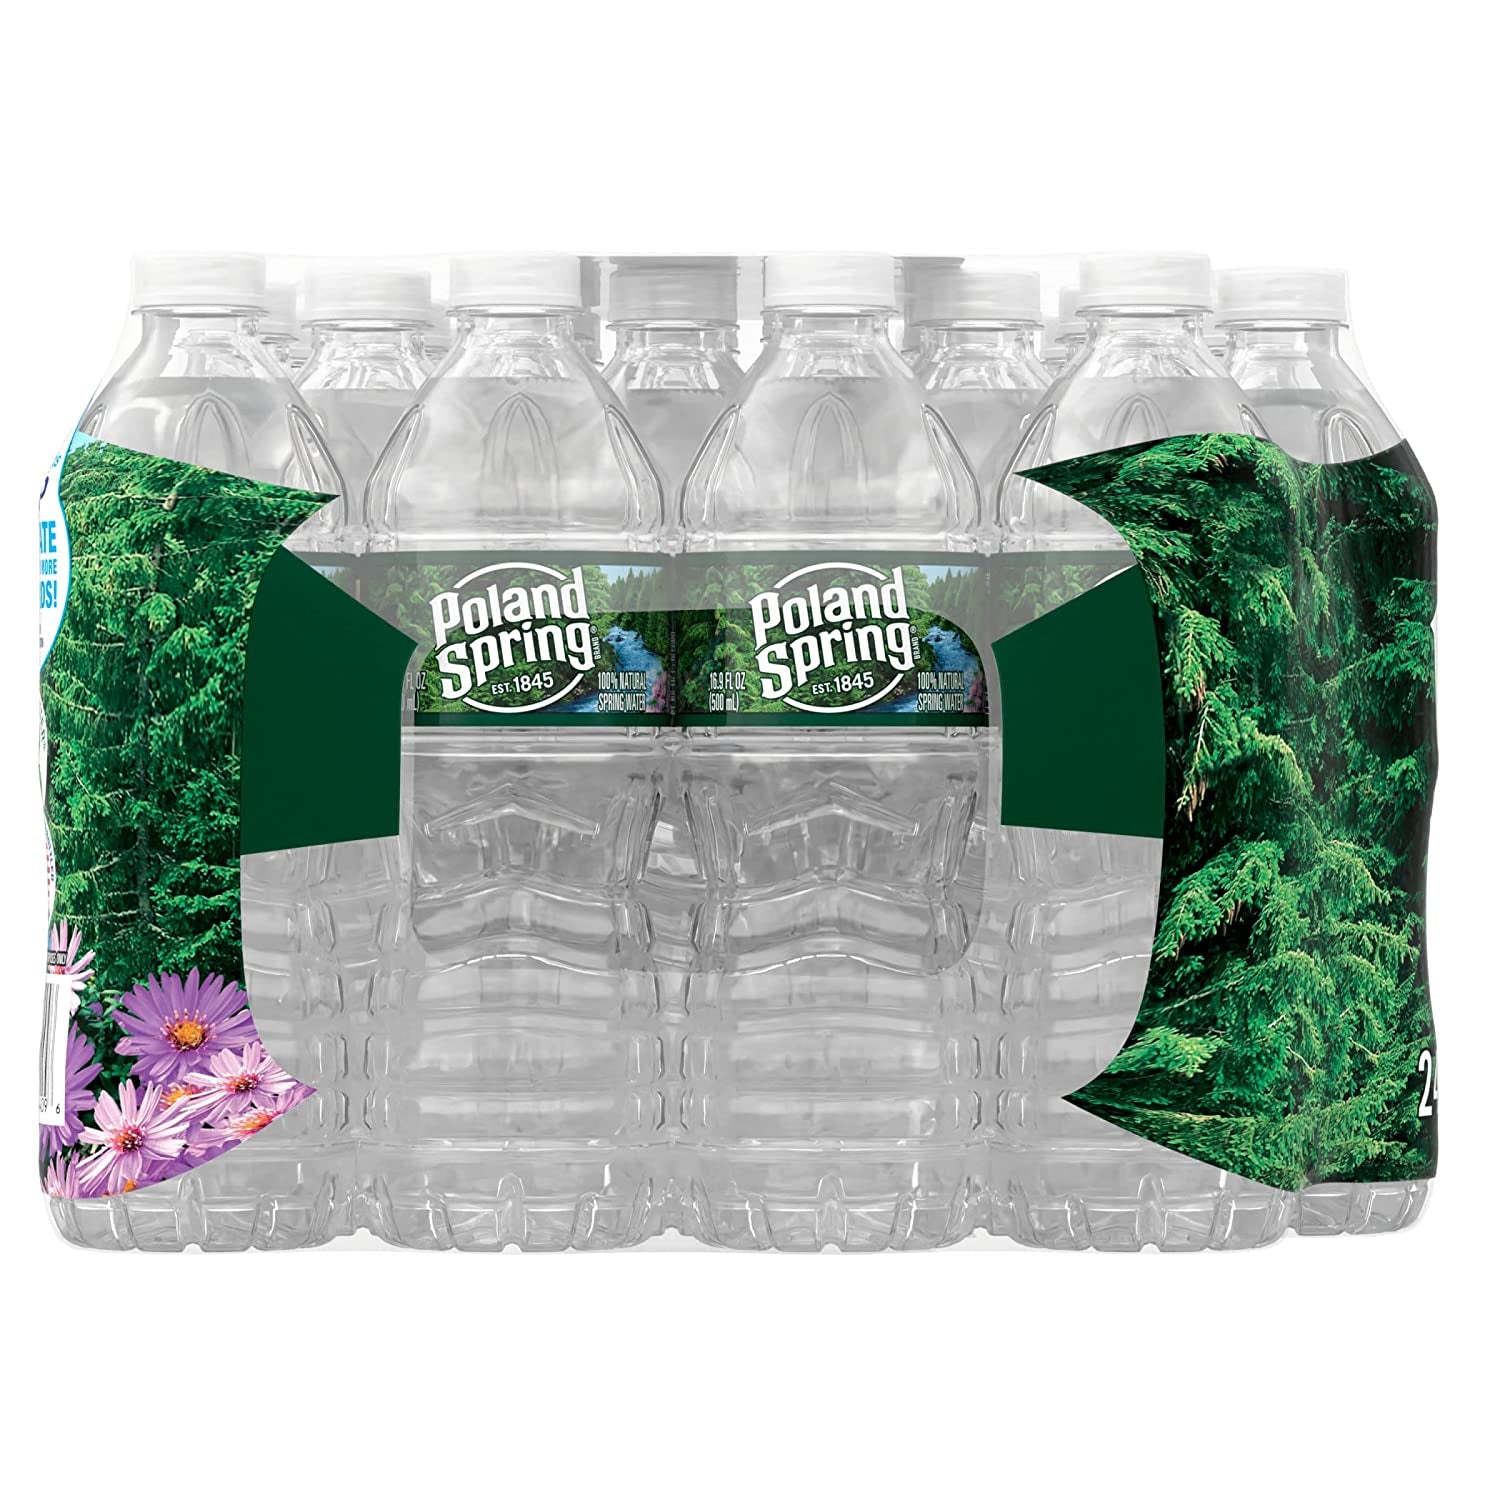 Poland Spring Brand 100% Natural Spring Water, 16.9 Oz Plastic Bottles (Pack of 24)